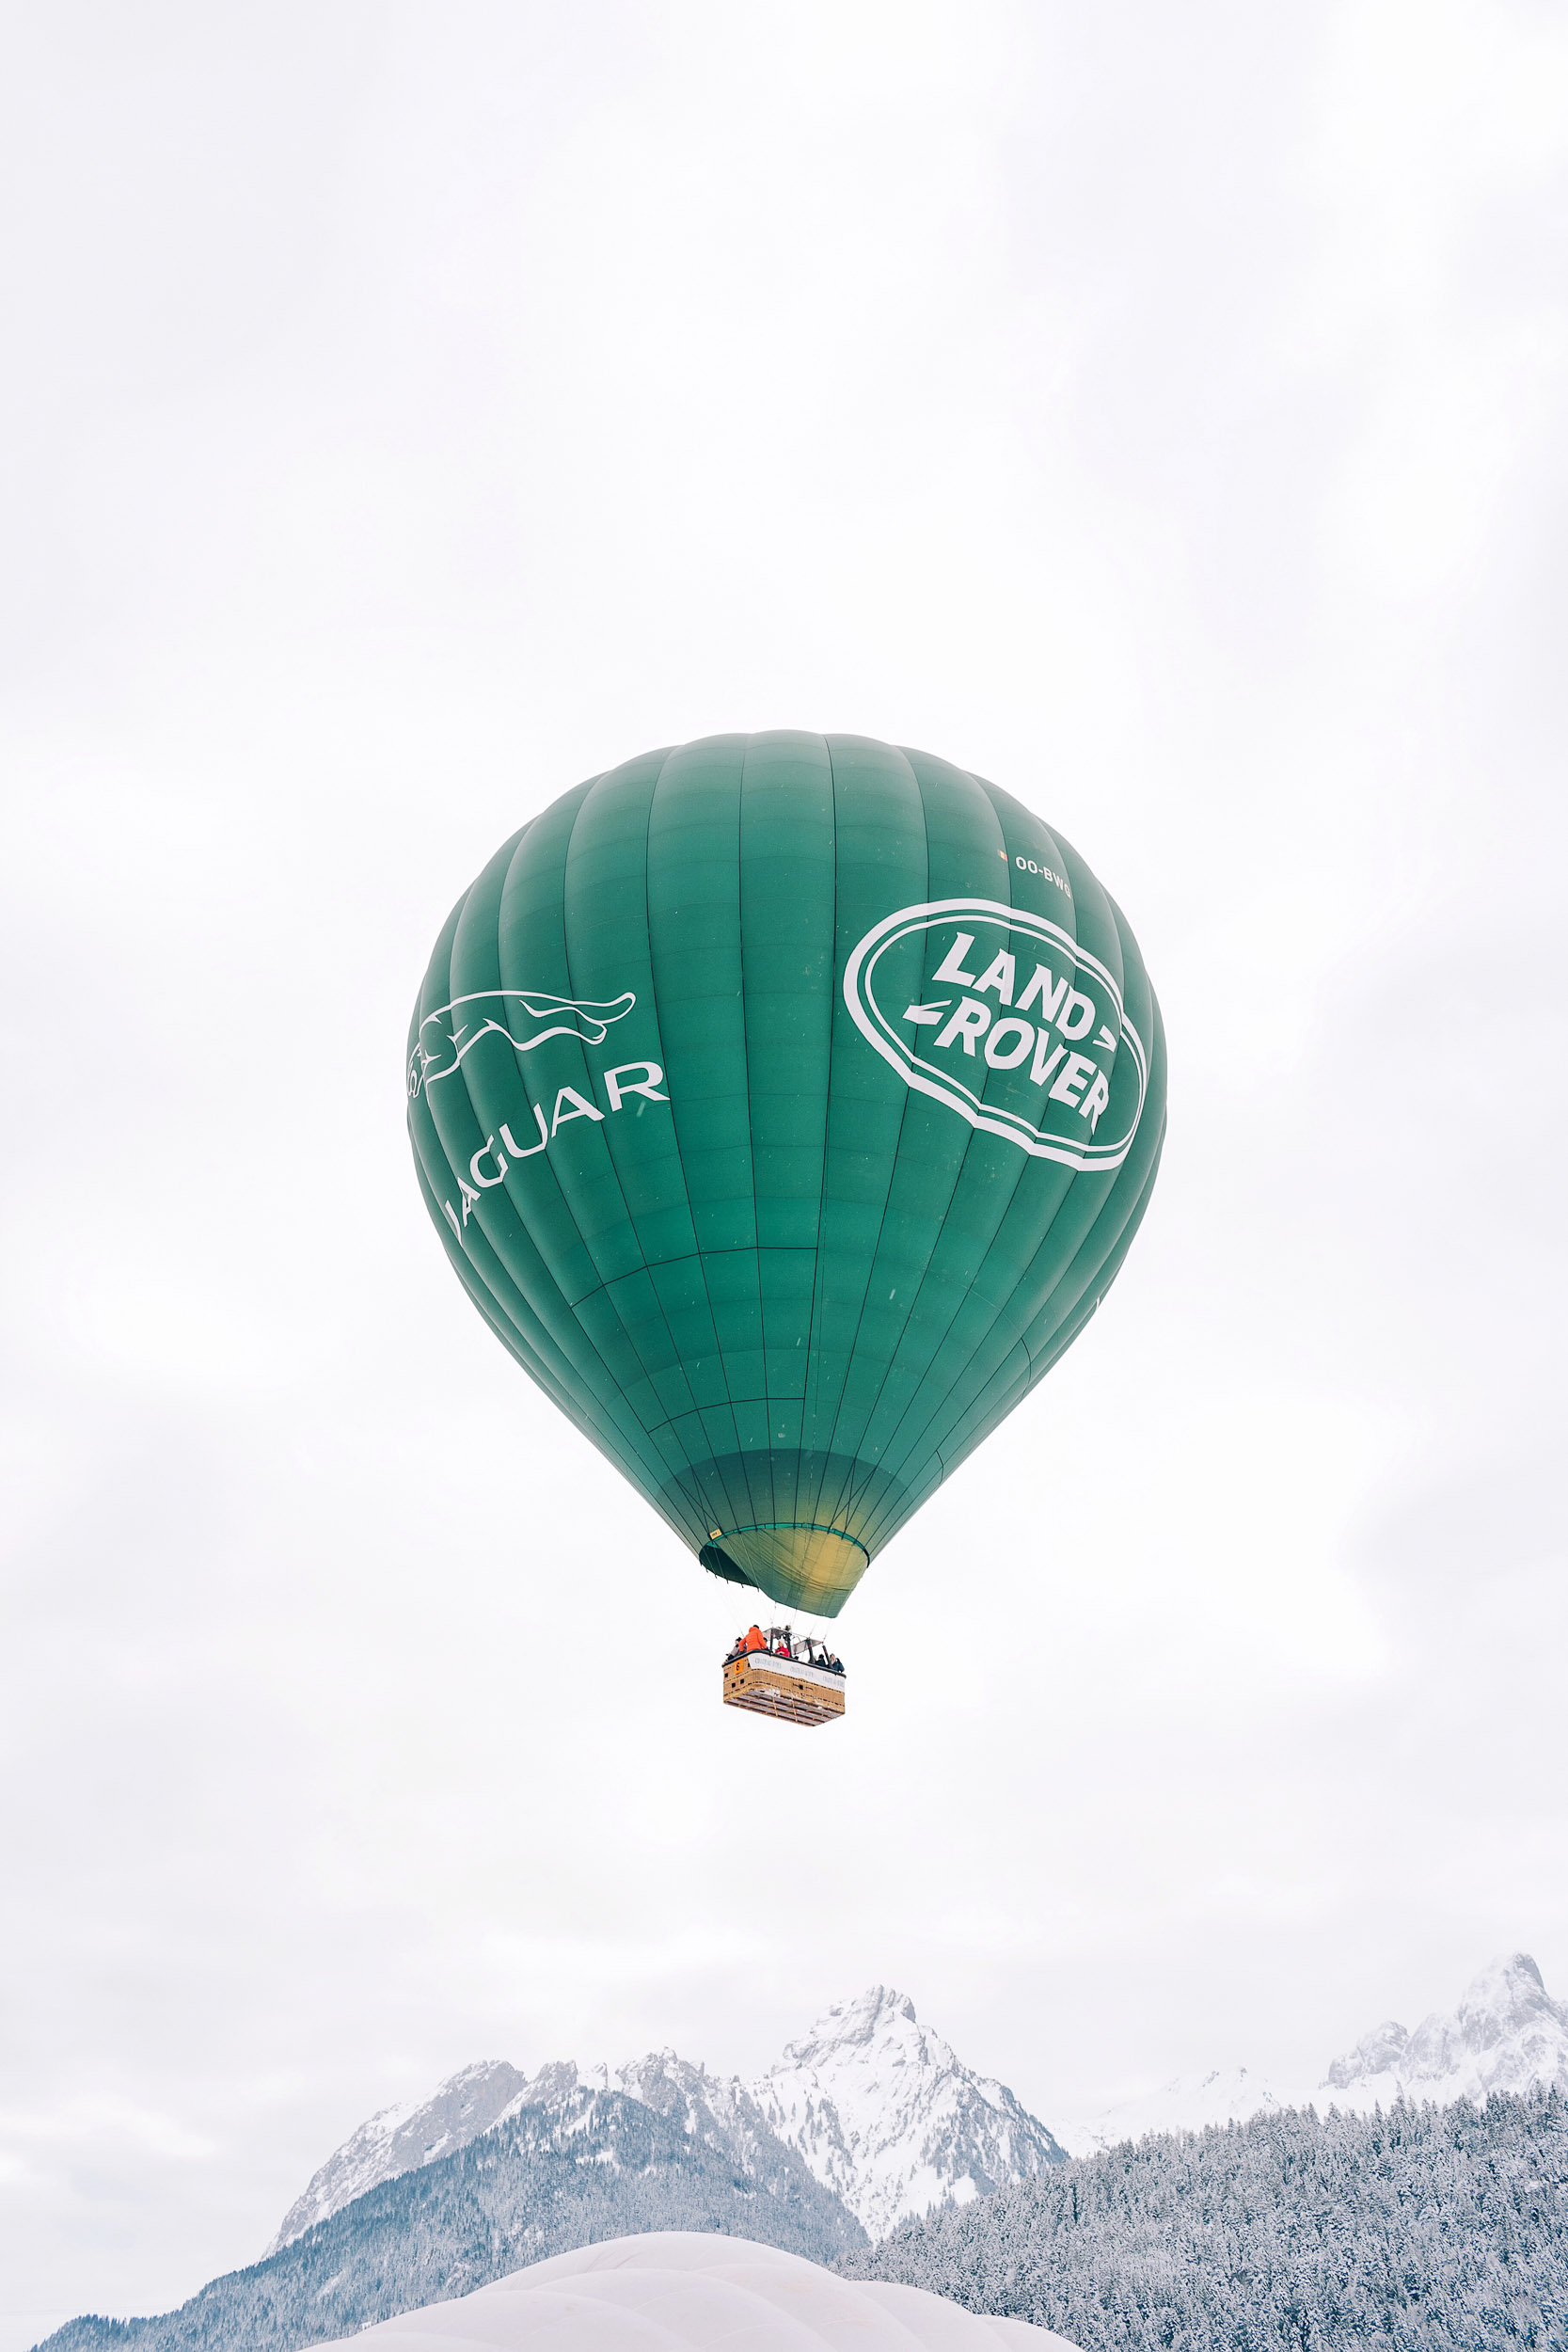 A Land Rover balloon at the International Hot Air Balloon Festival